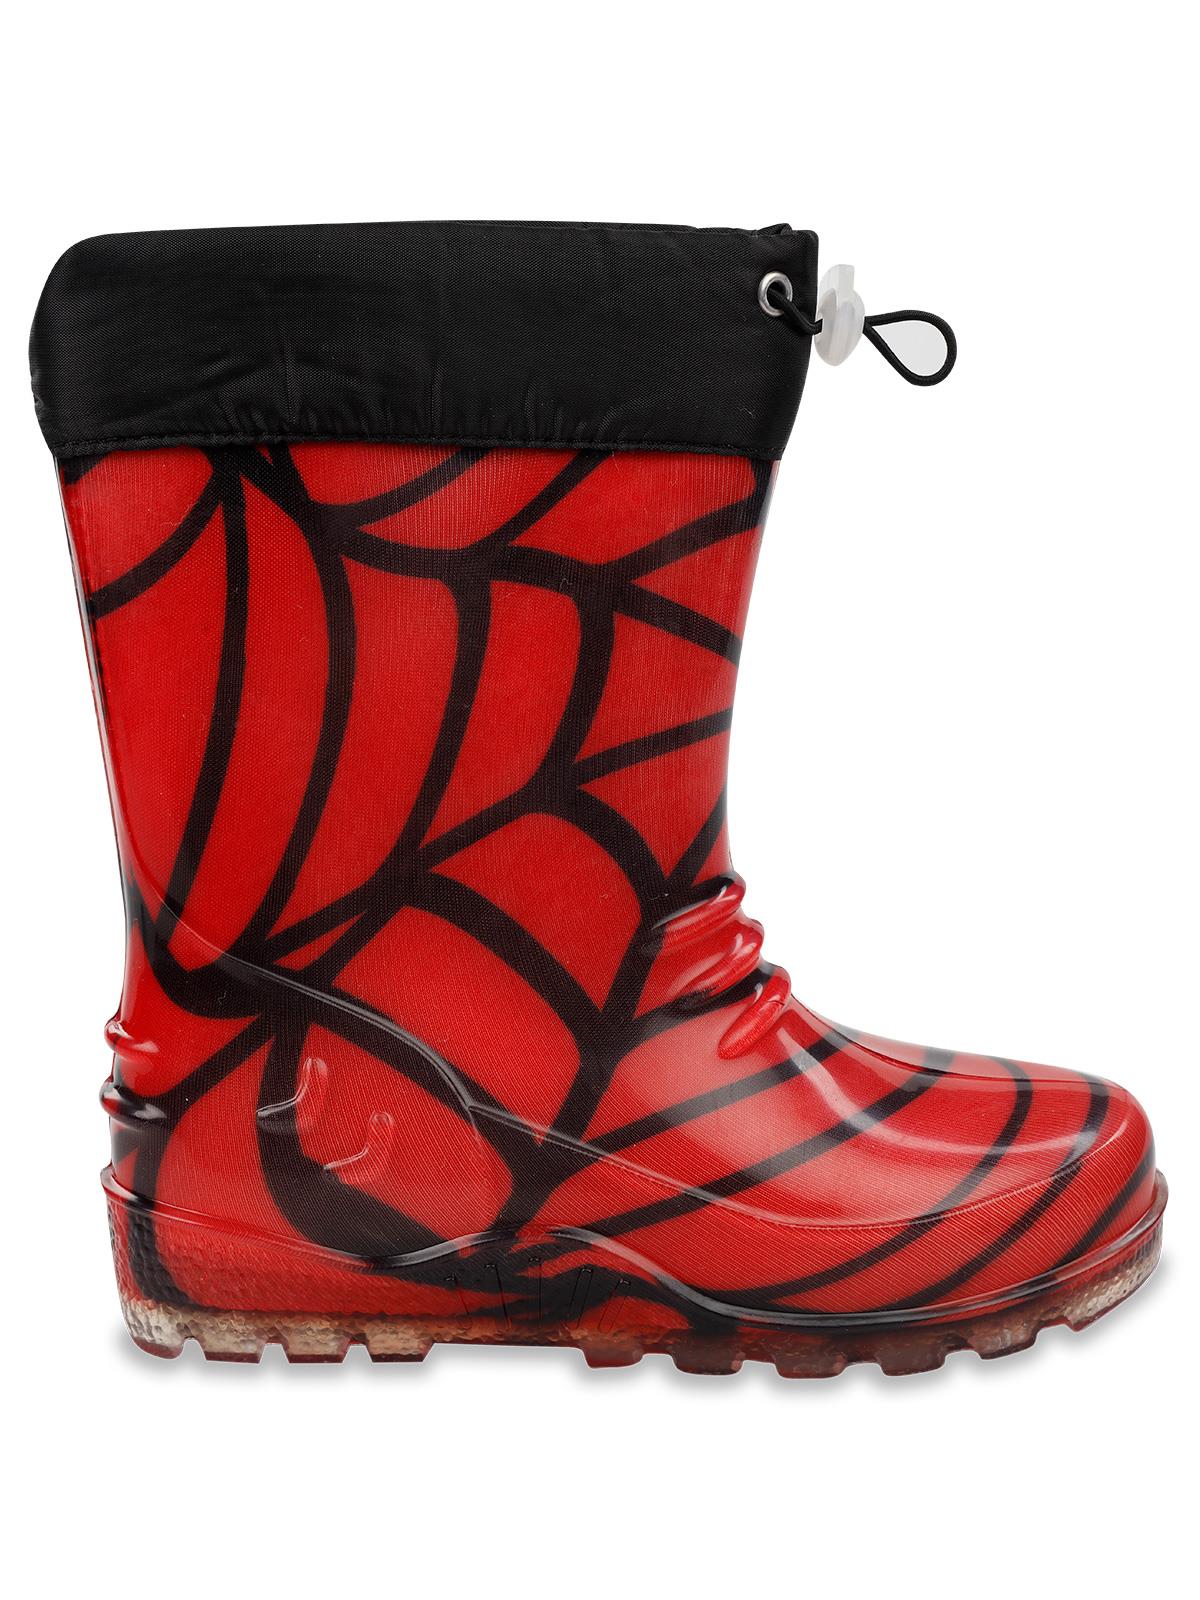 Civil Boots Erkek Çocuk Çizme 24-28 Numara Kırmızı